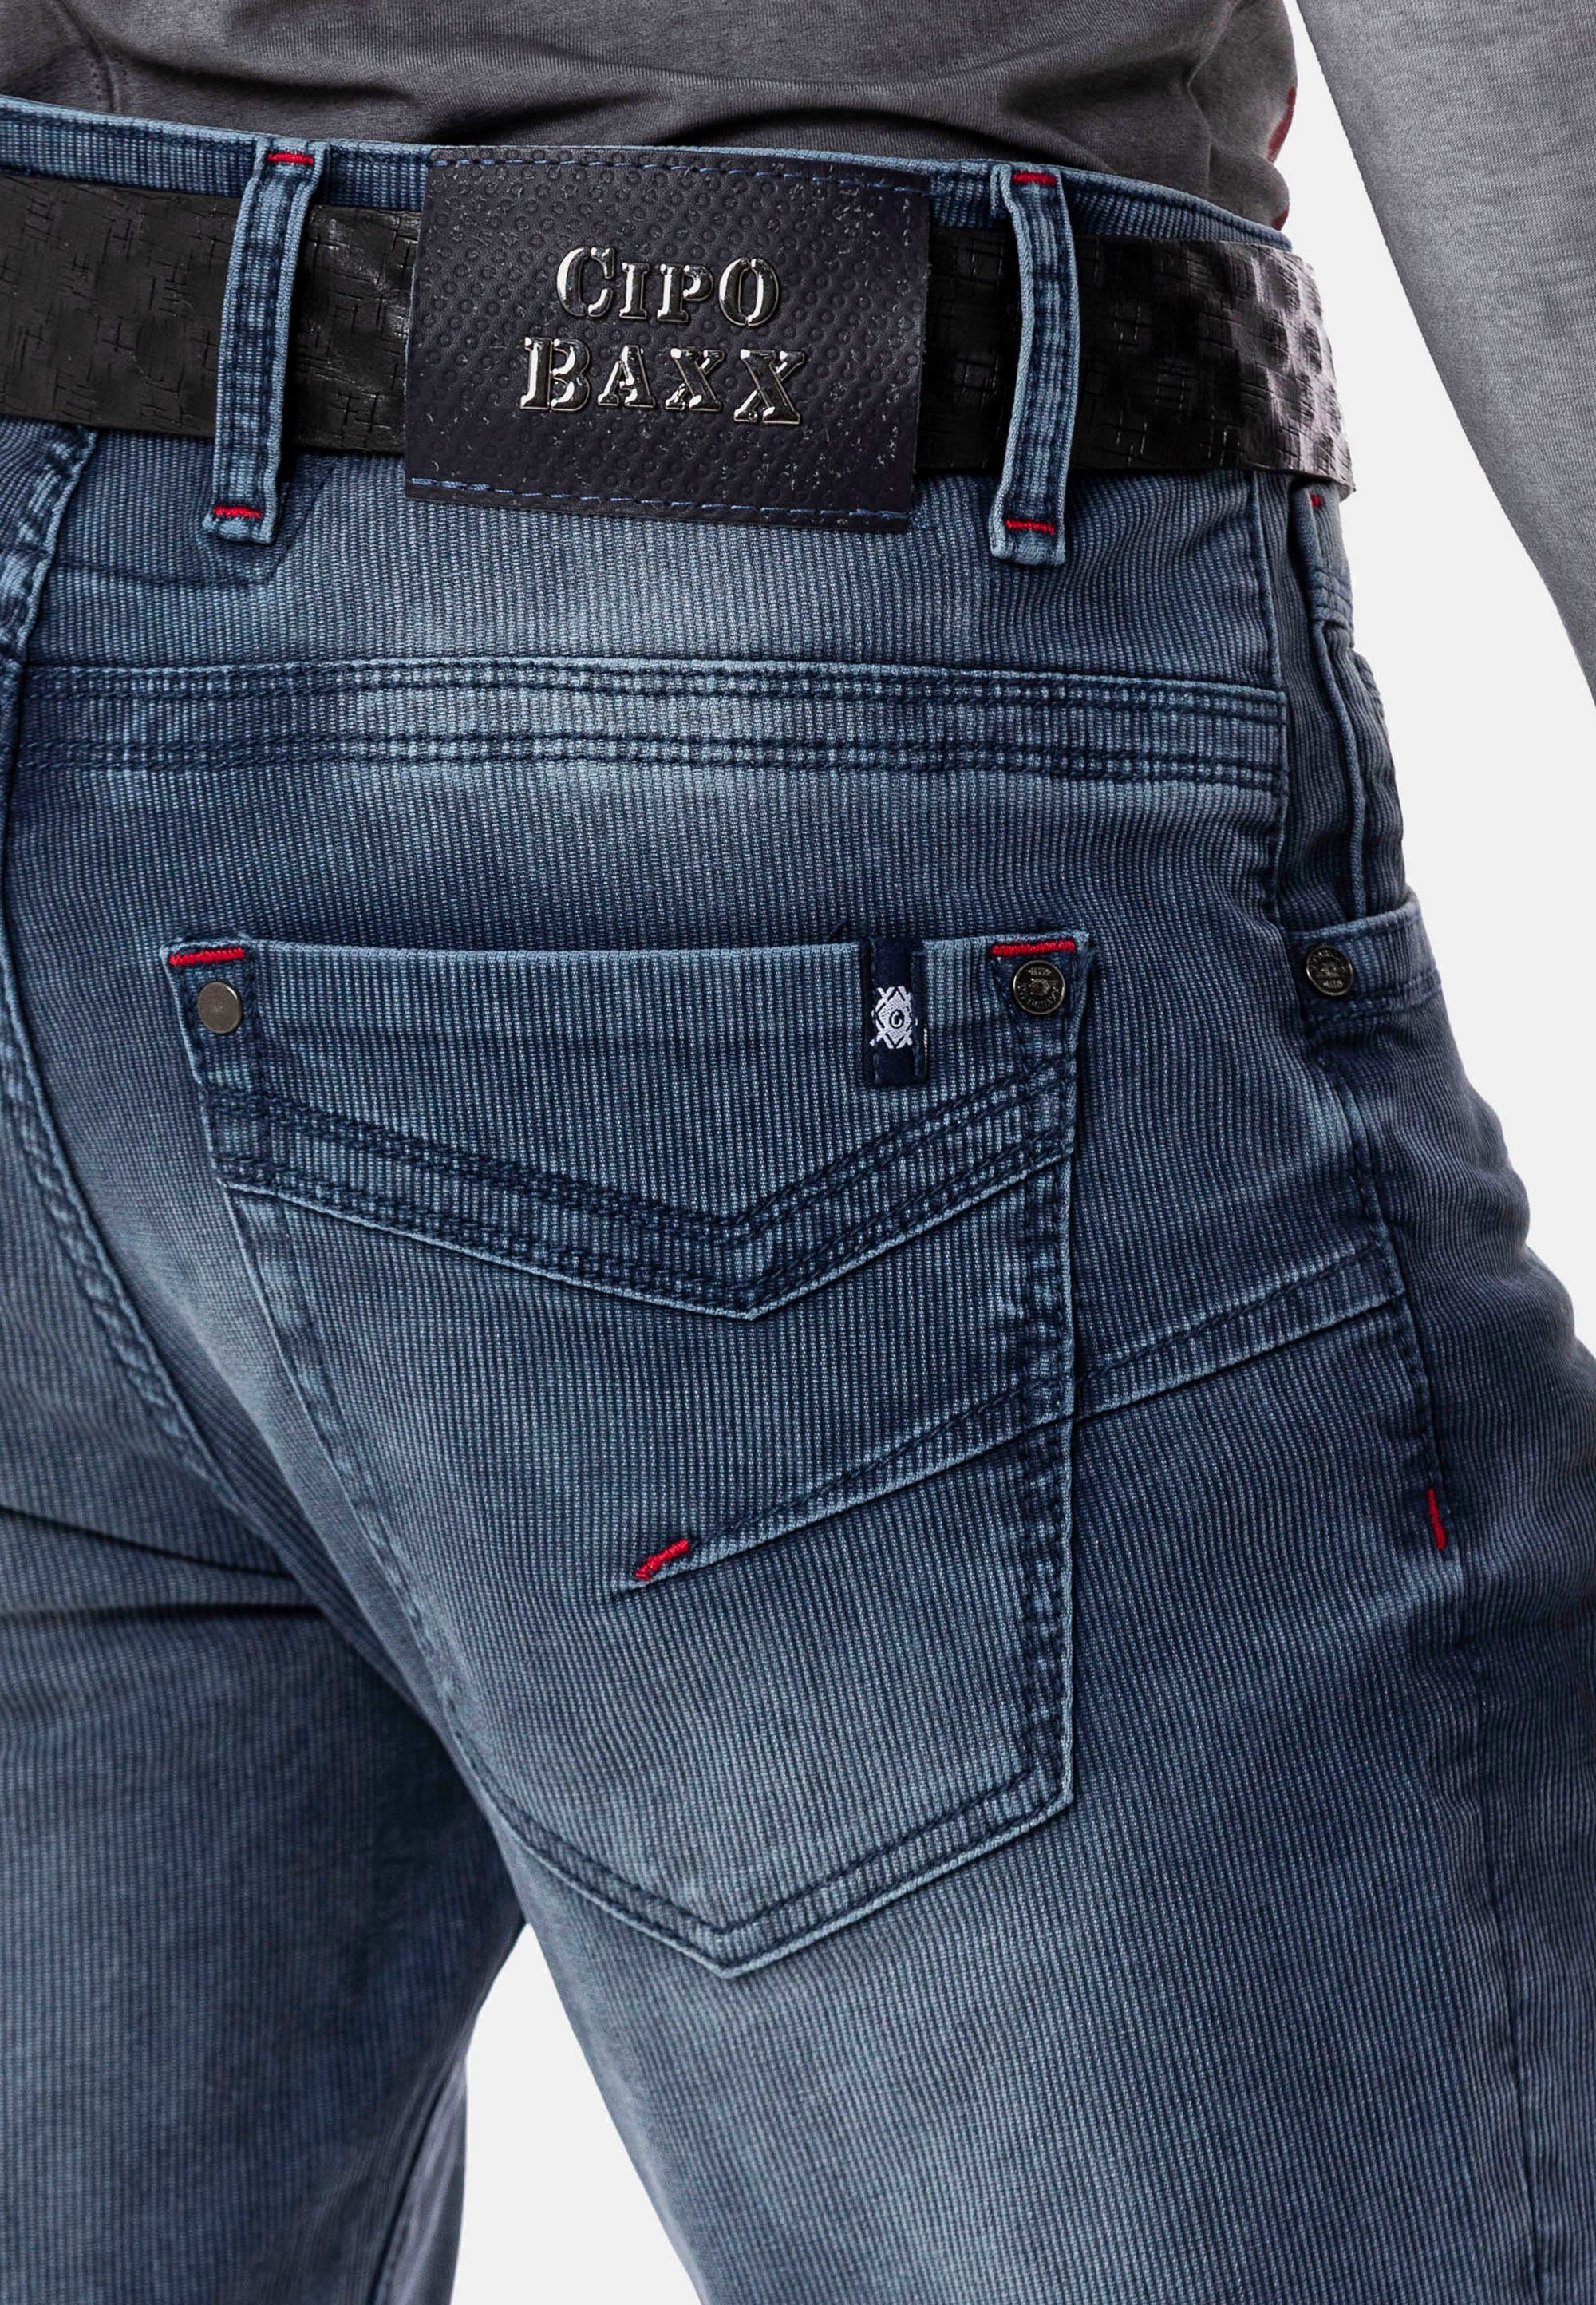 Cipo & Baxx Straight-Jeans stilvollem in blau Cord-Design